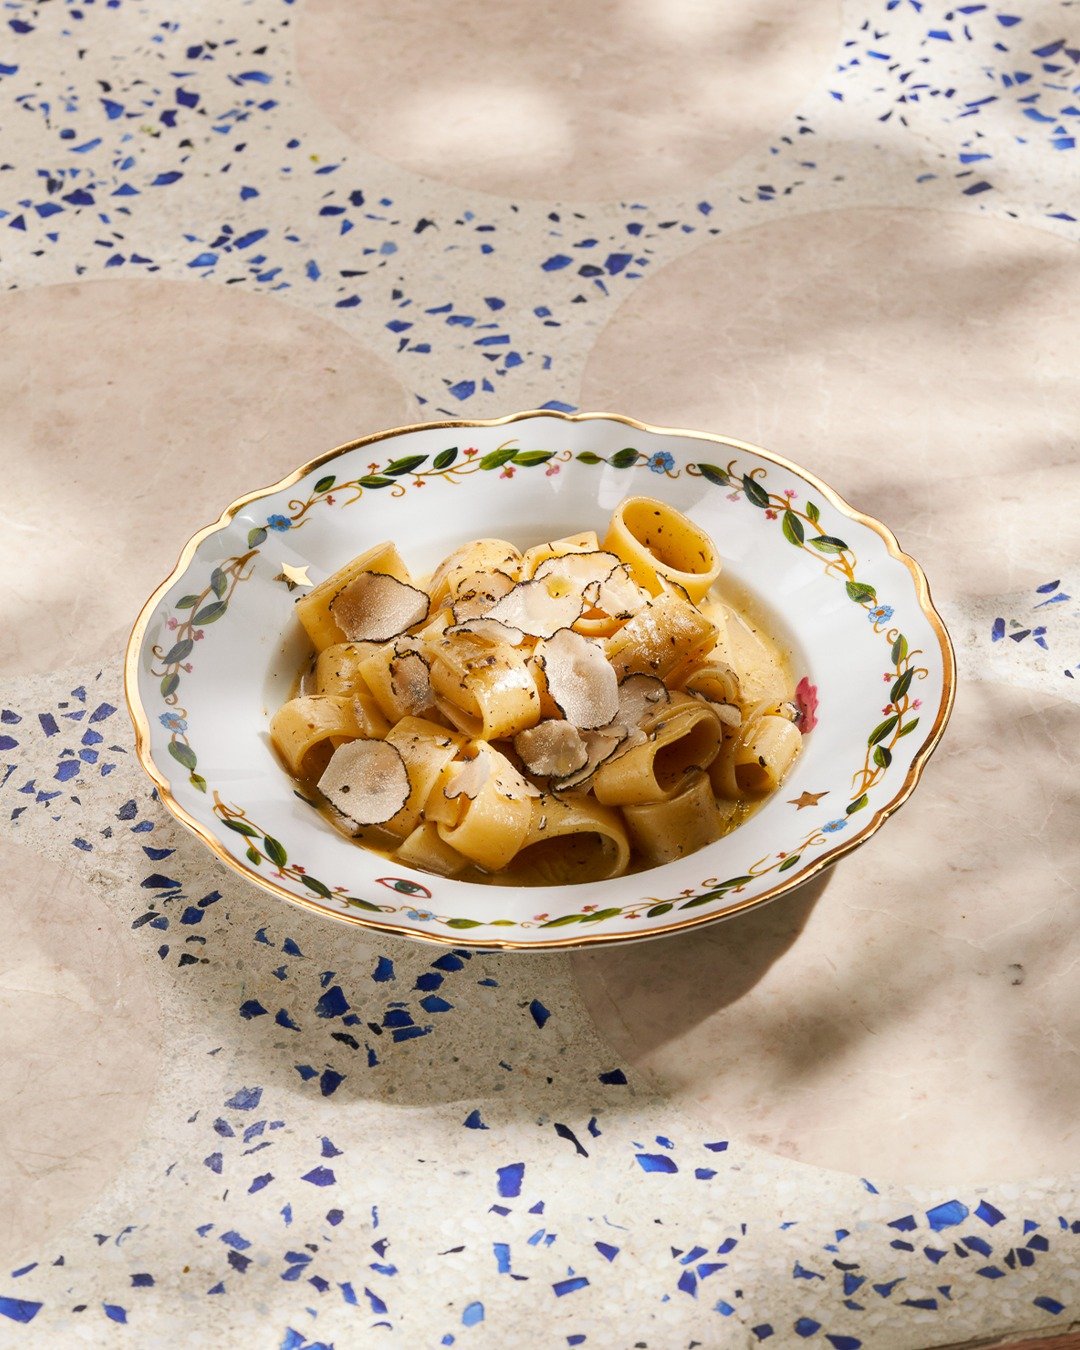 Truffle Calamarata - when earthnuts meet pasta, something magical happens.

For reservations: +971 4 564 0008

#MiyaDubai #GreekRestaurant #Greekcuisine #Bluewaters